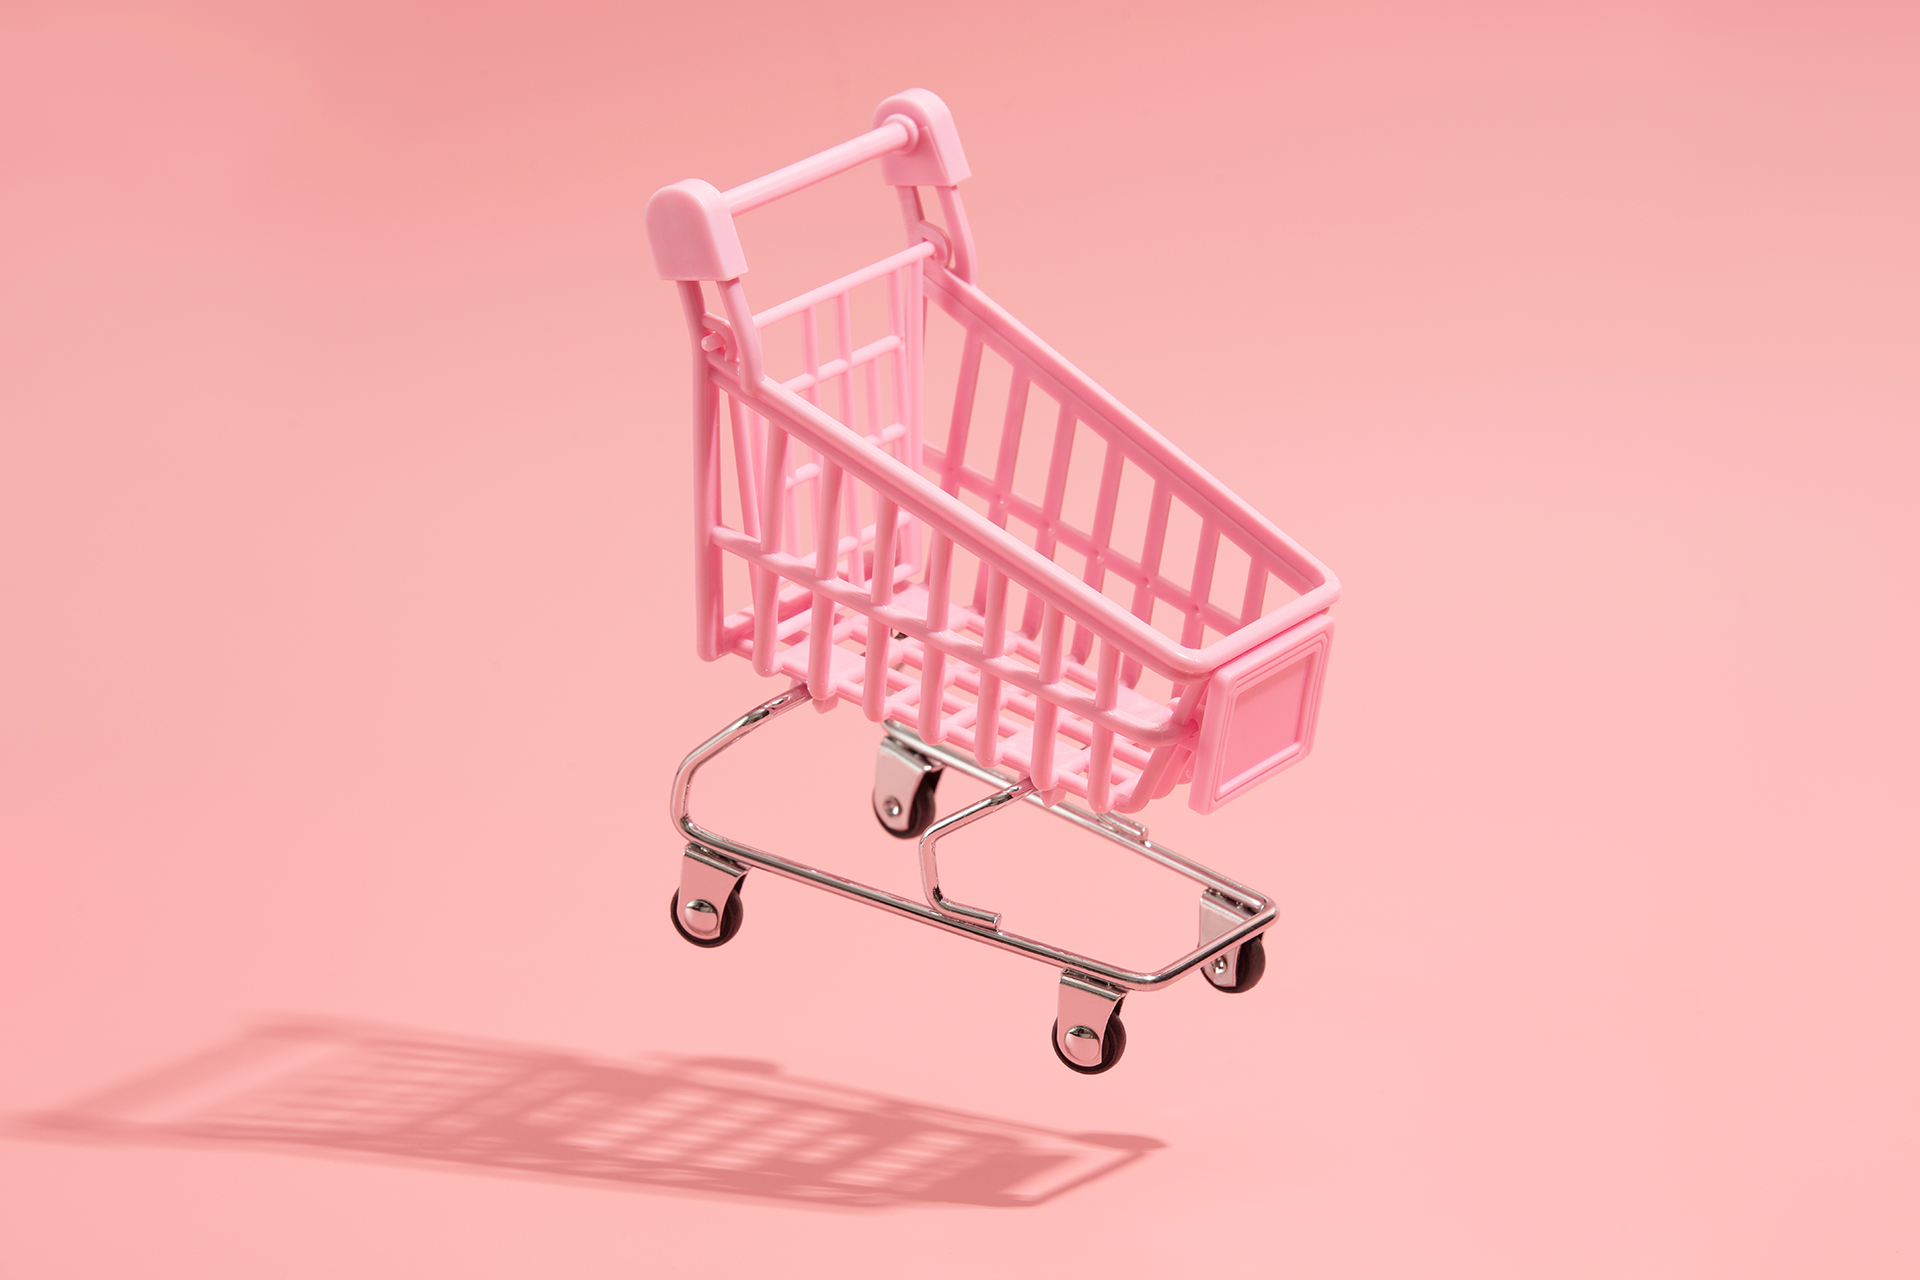 Pink miniature grocery cart on light pink background. Blog post on transactional marketing vs relationship marketing